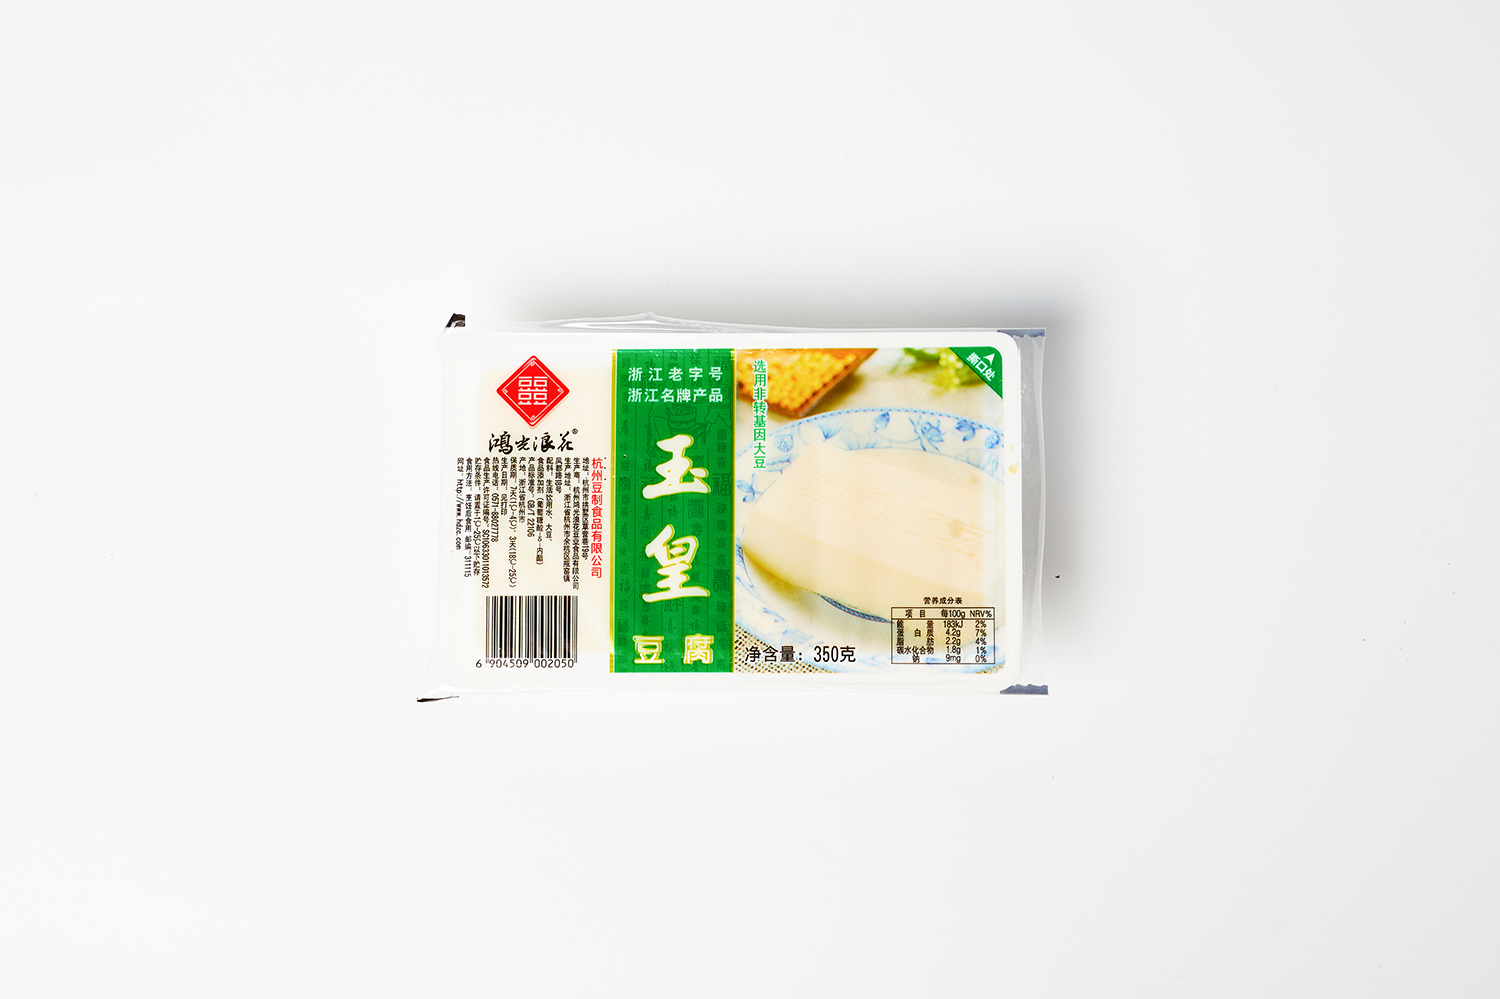 Yuhuang tofu